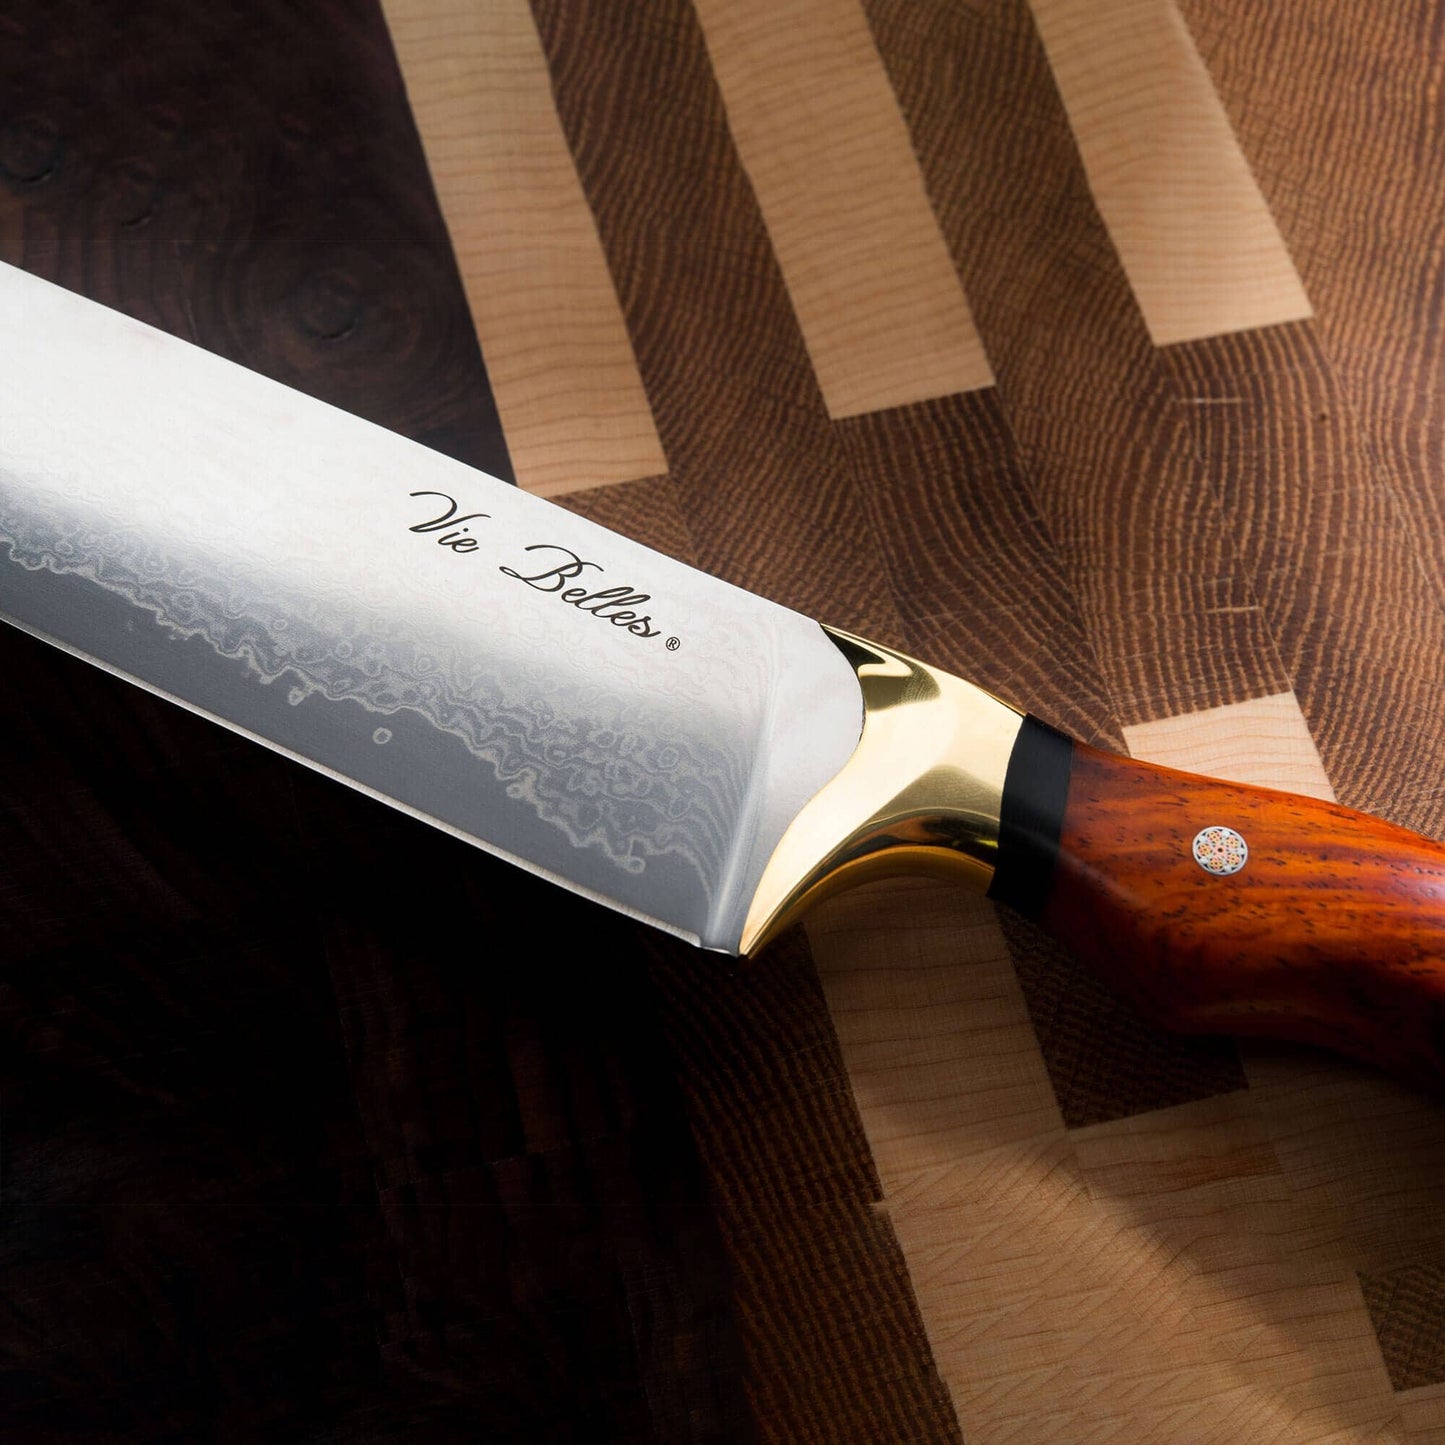 Luxury Pro Chef's Knife. 8-inch